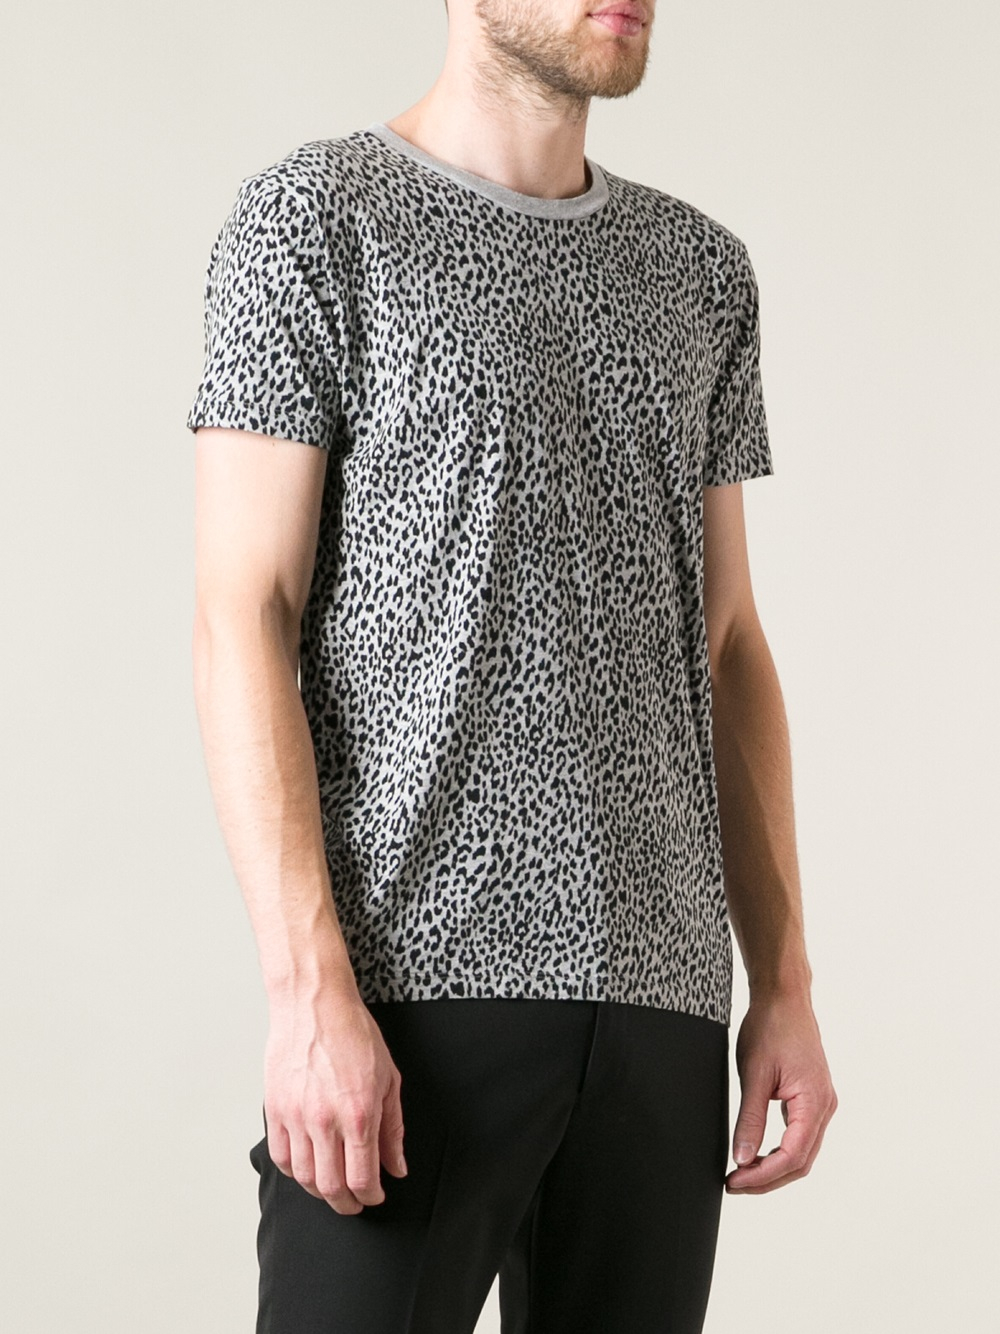 Lyst - Saint Laurent Leopard Print T-Shirt in Gray for Men